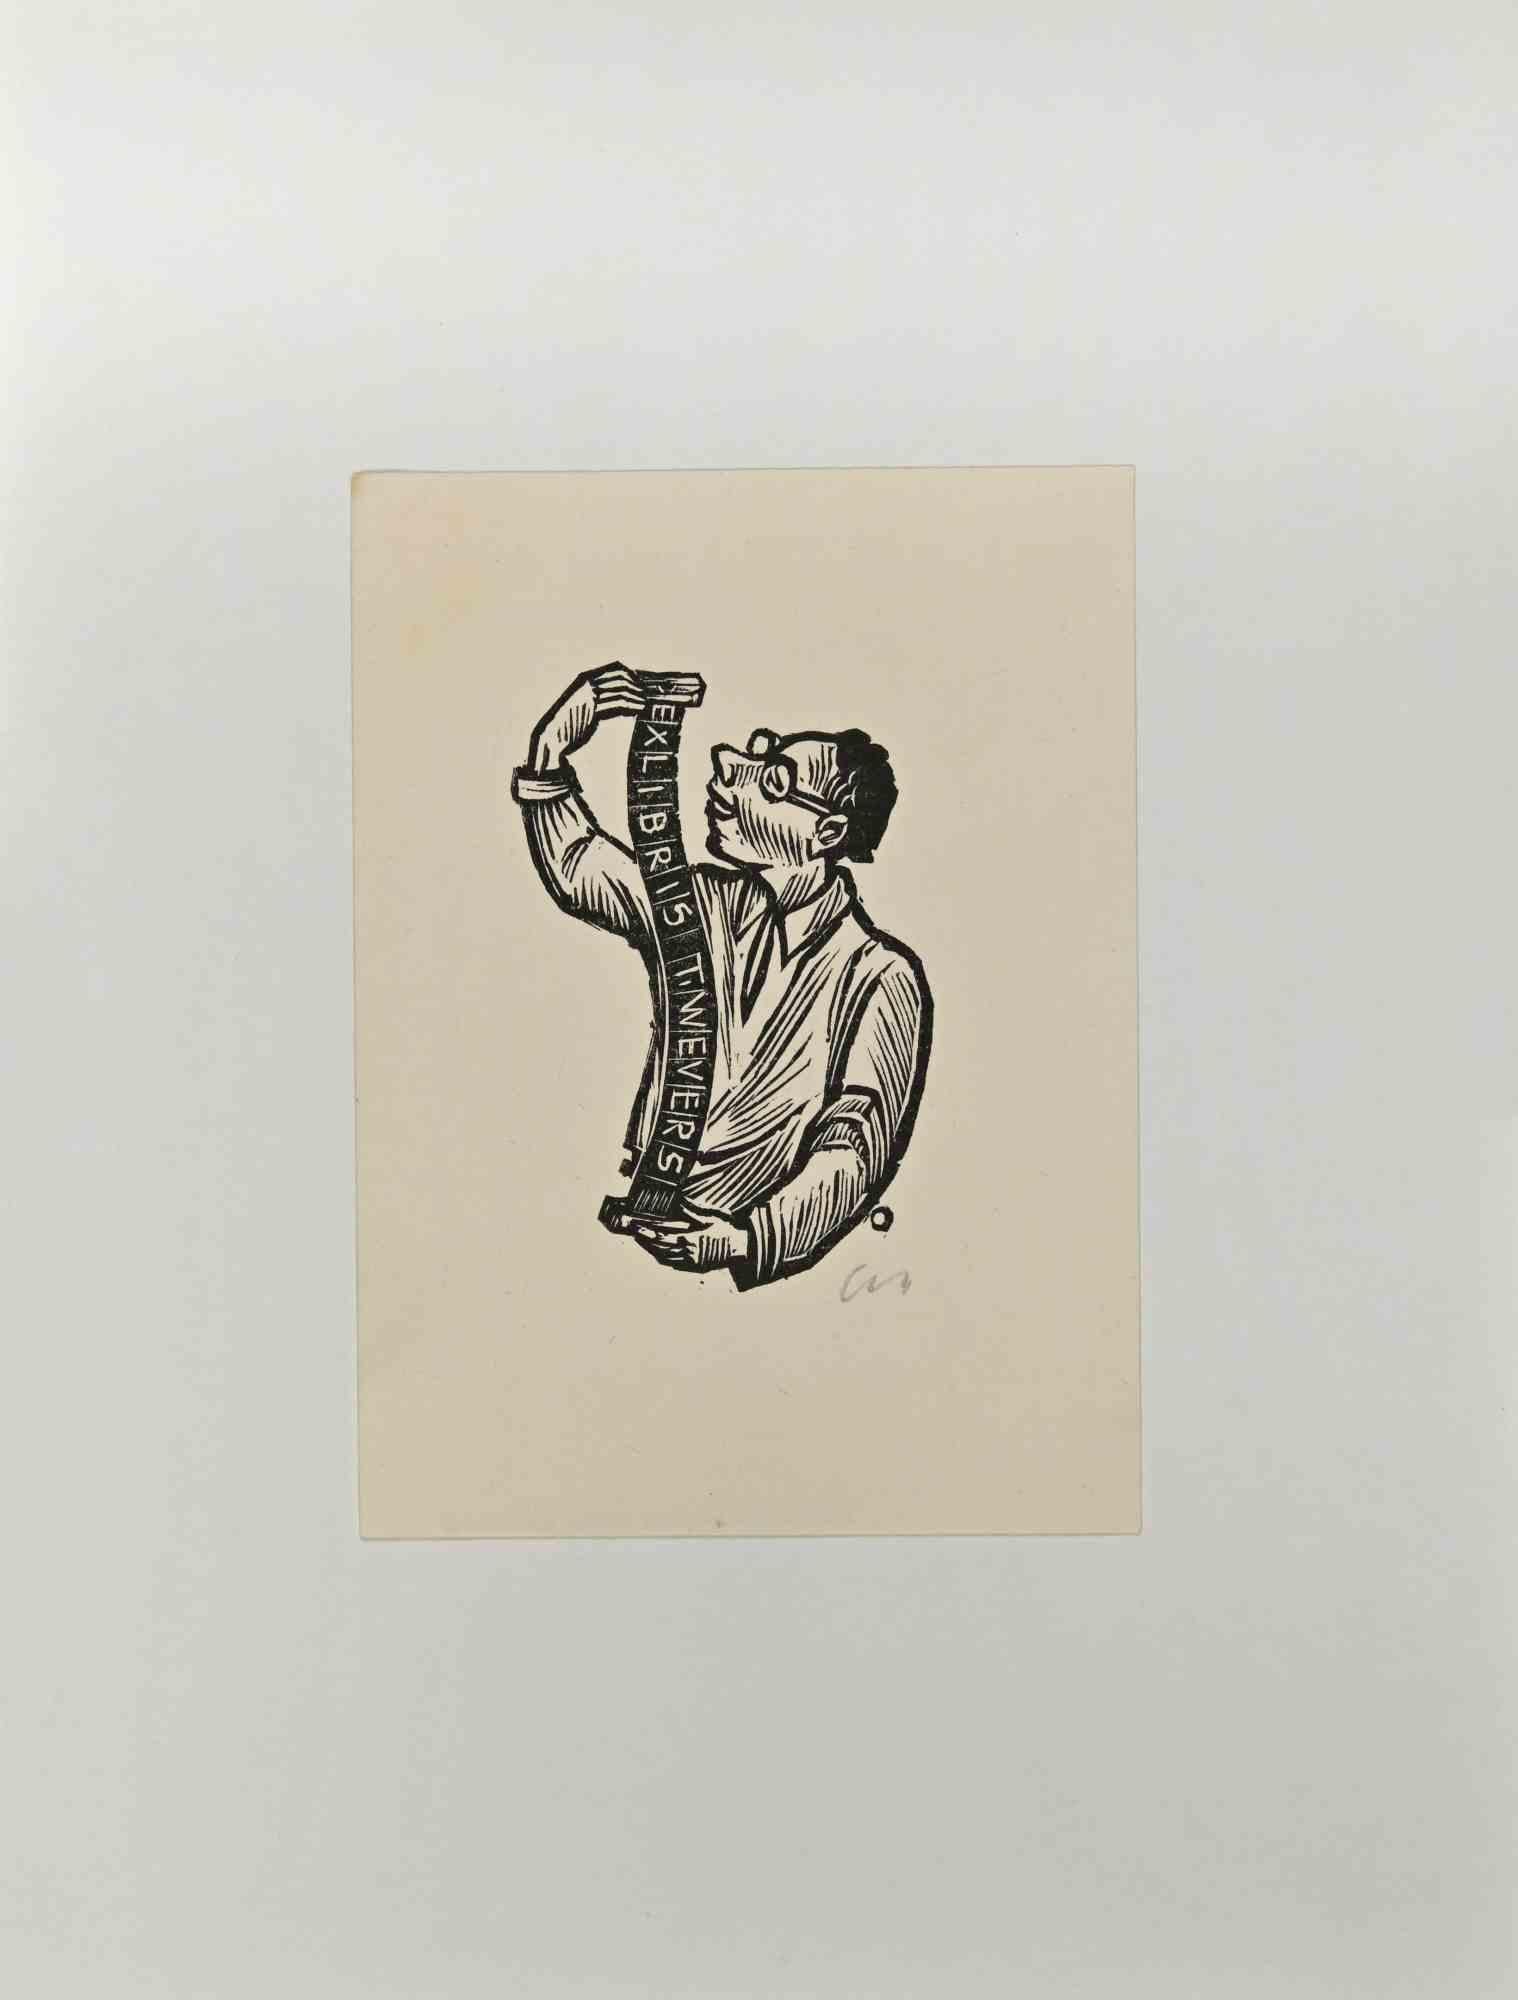  Ex Libris  - T. Wevers - Woodcut - 1953 - Art by Herbert Stefan Ott